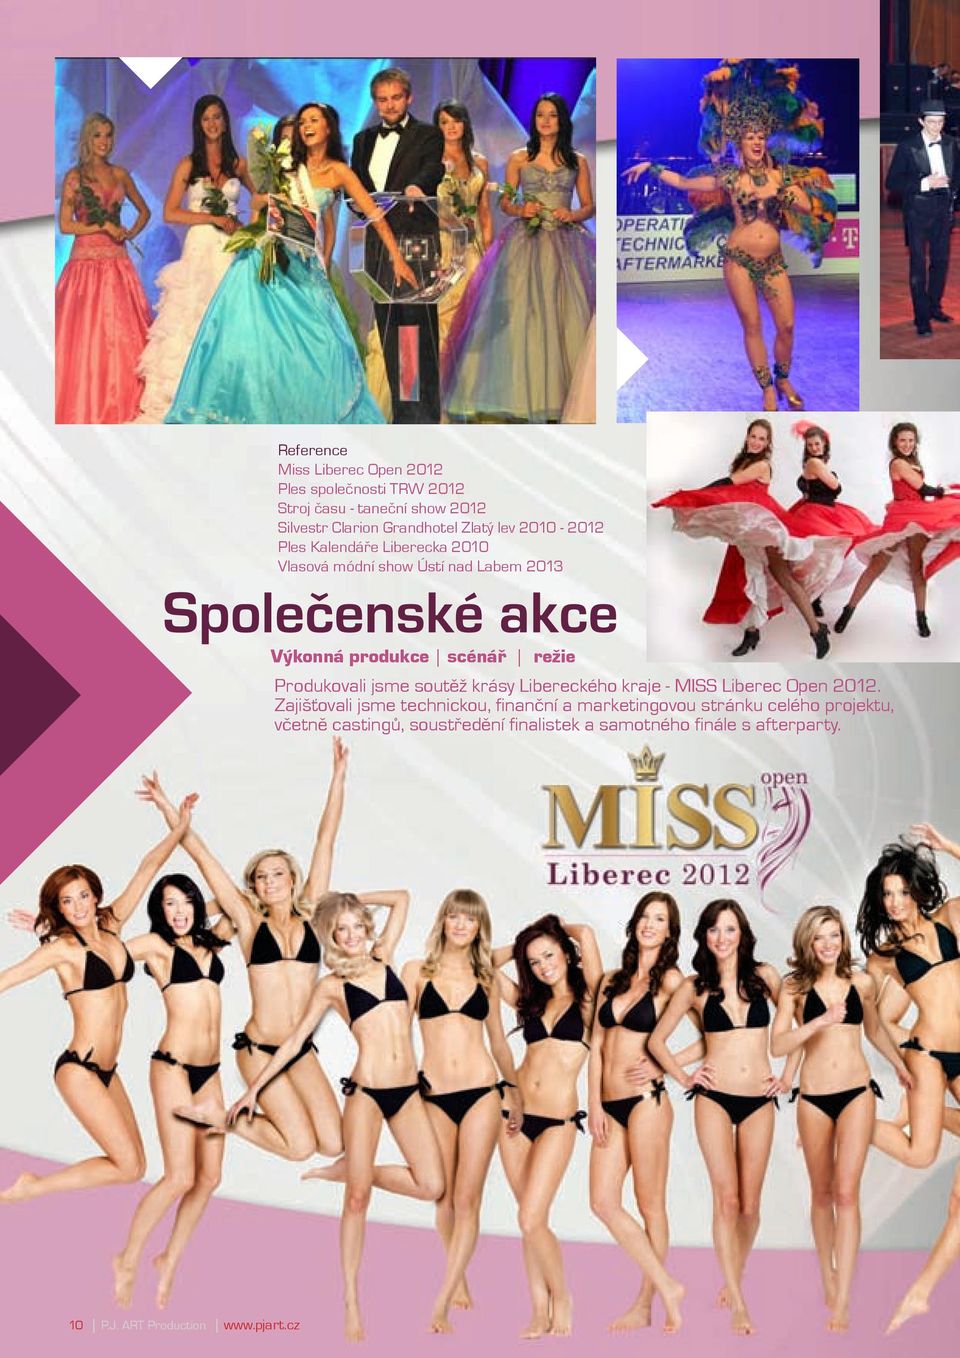 jsme soutěž krásy Libereckého kraje - MISS Liberec Open 2012.